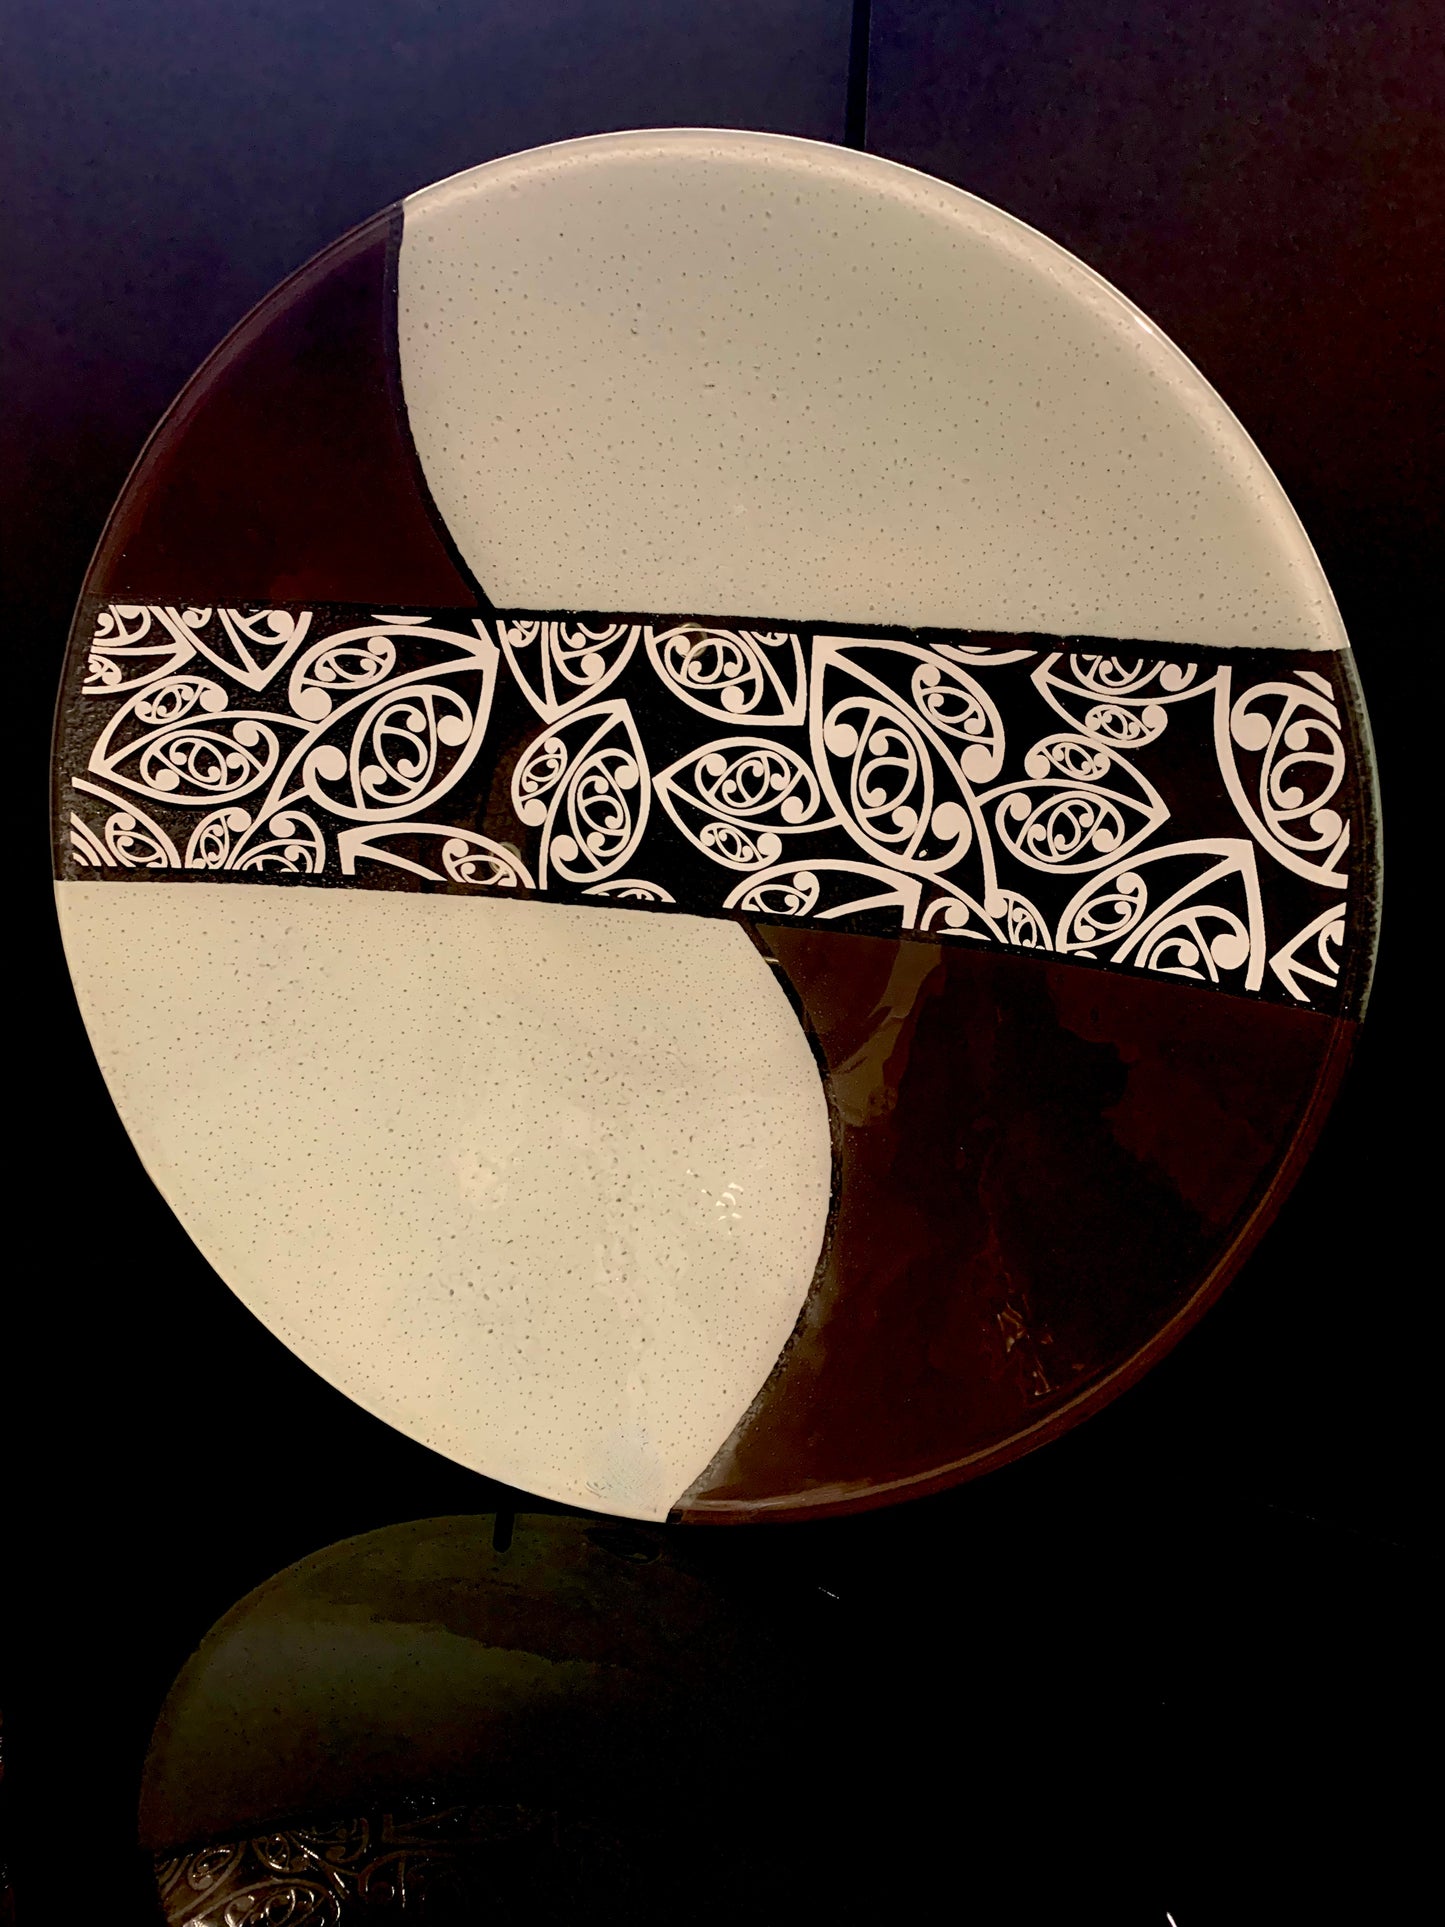 Fused Glass Bowl by Maori Boy - Kowhaiwhai Design (brown and white) 40cm